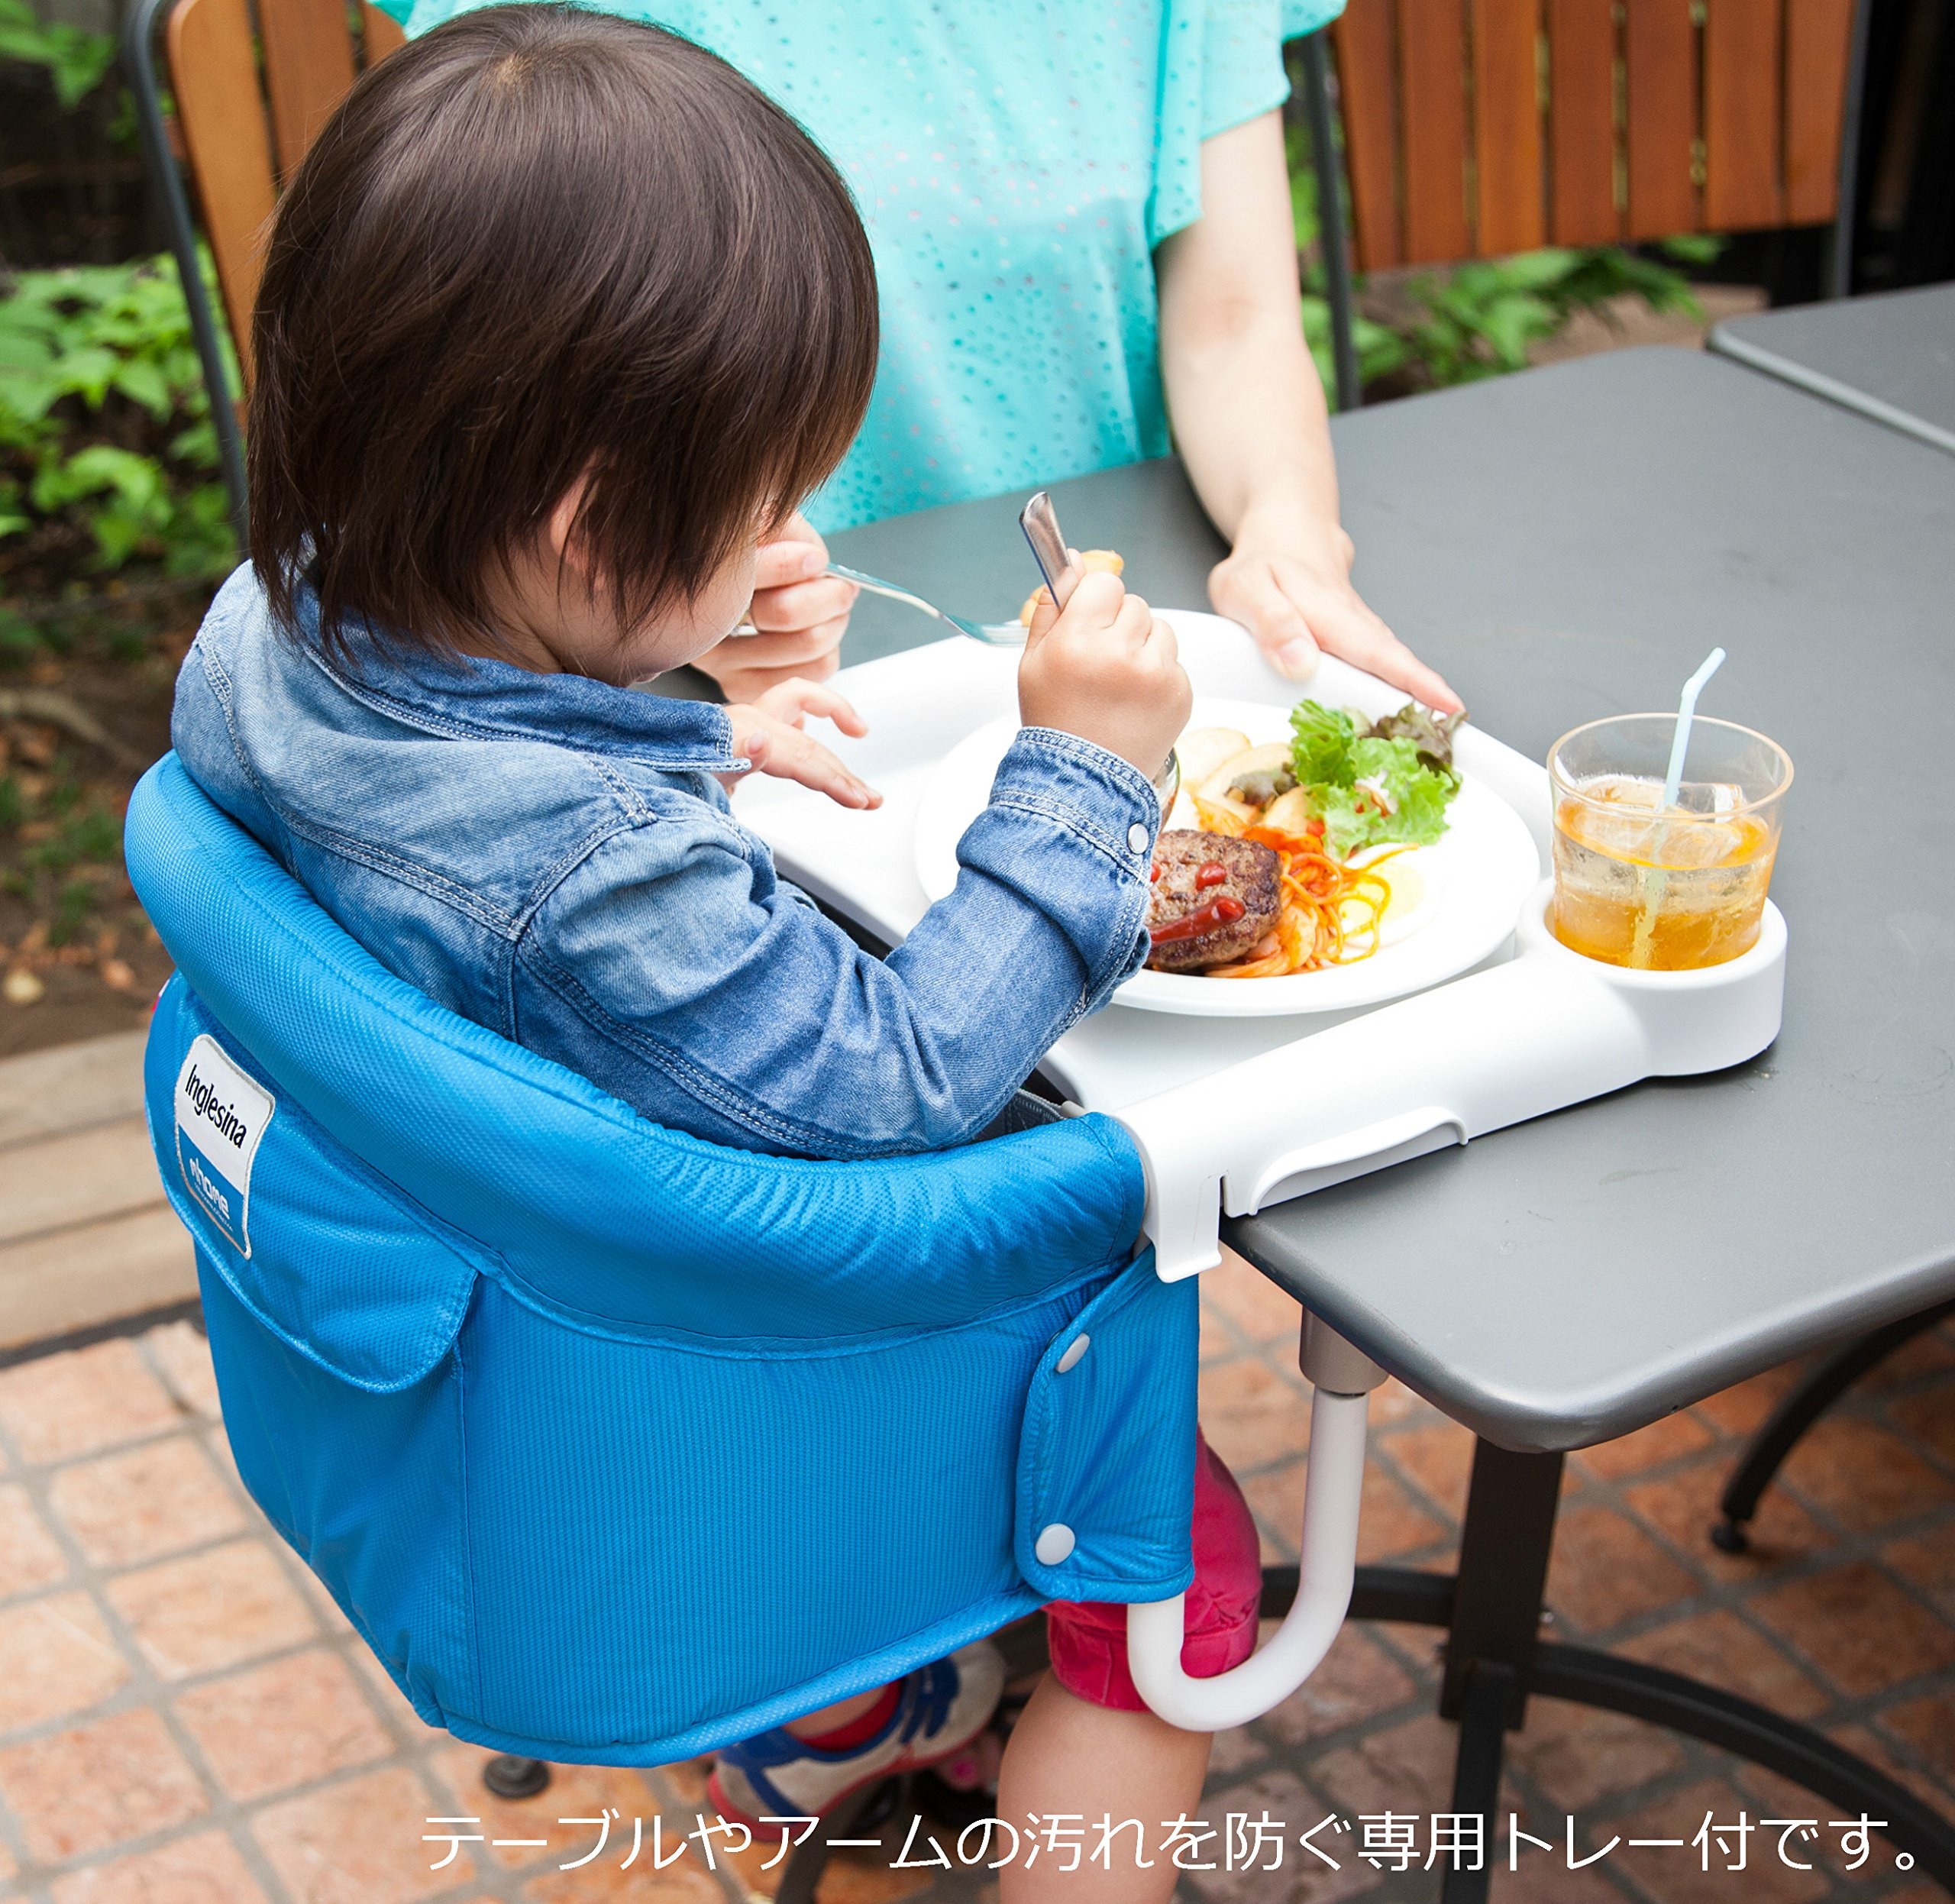 "inguritsu sina inglesina fast dedicated tray table chair baby chair"